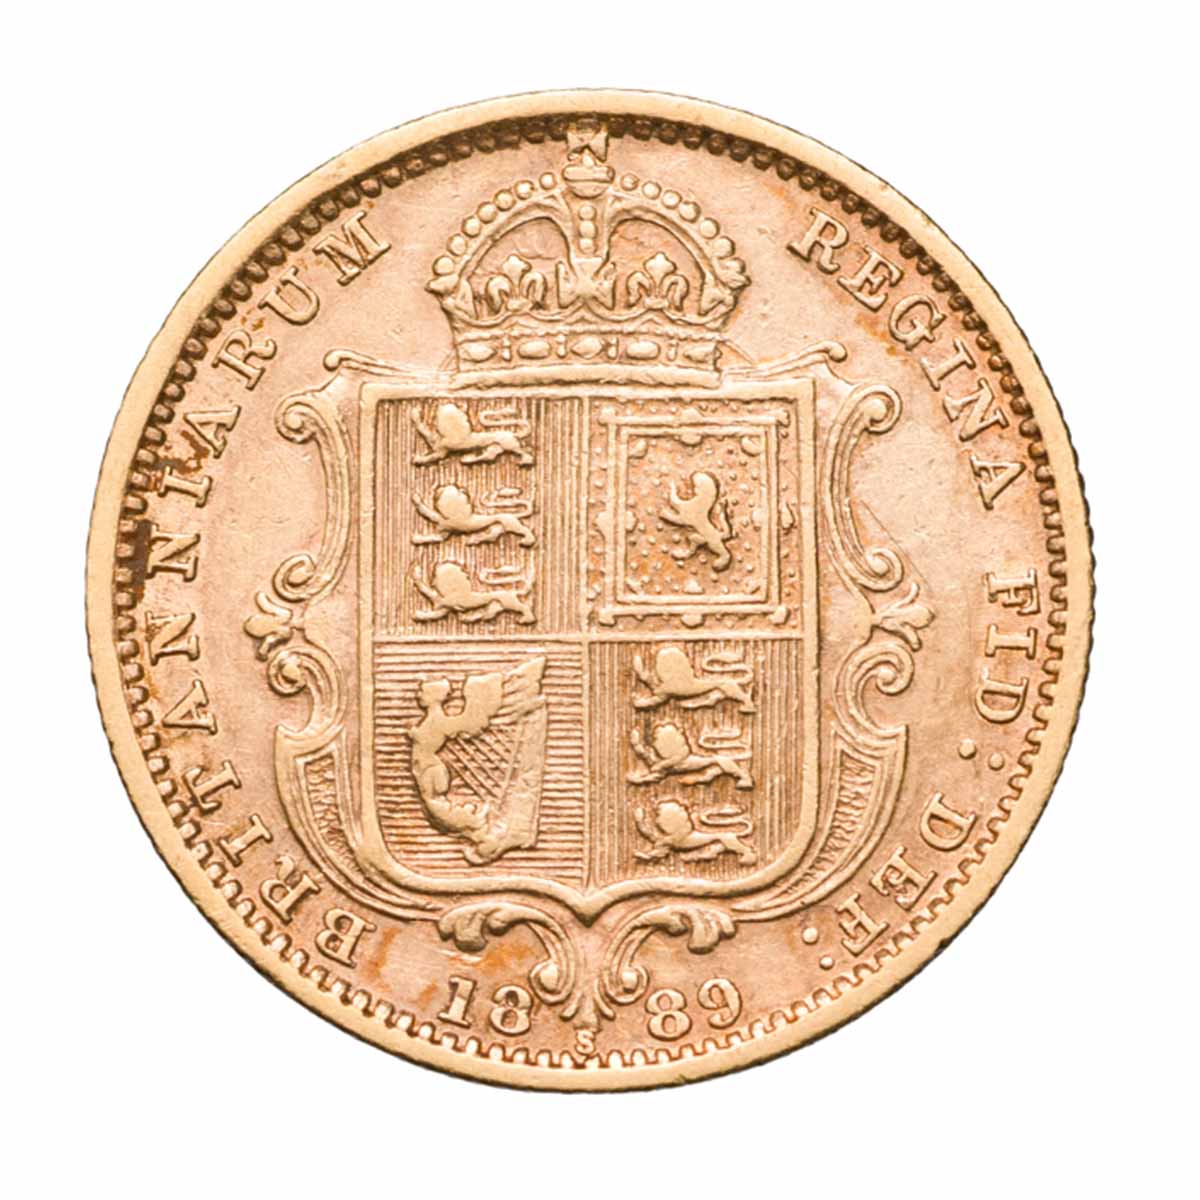 Queen Victoria 1889S Jubilee Gold Half Sovereign good Fine